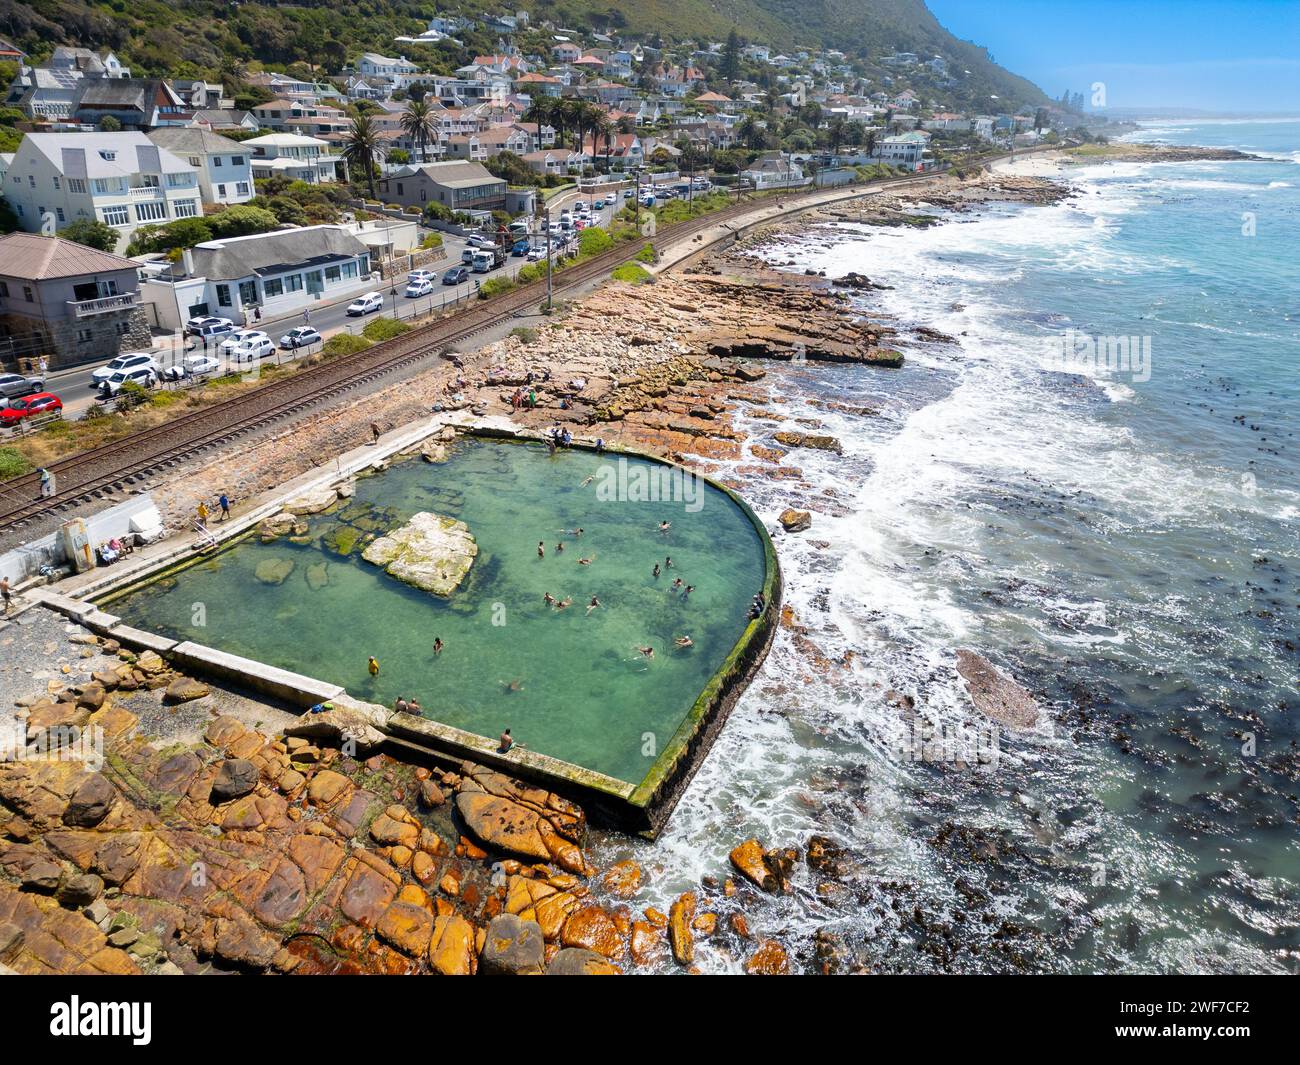 Dalebrook Tidal Pool, Kalk Bay, Cape Town, South Africa Stock Photo